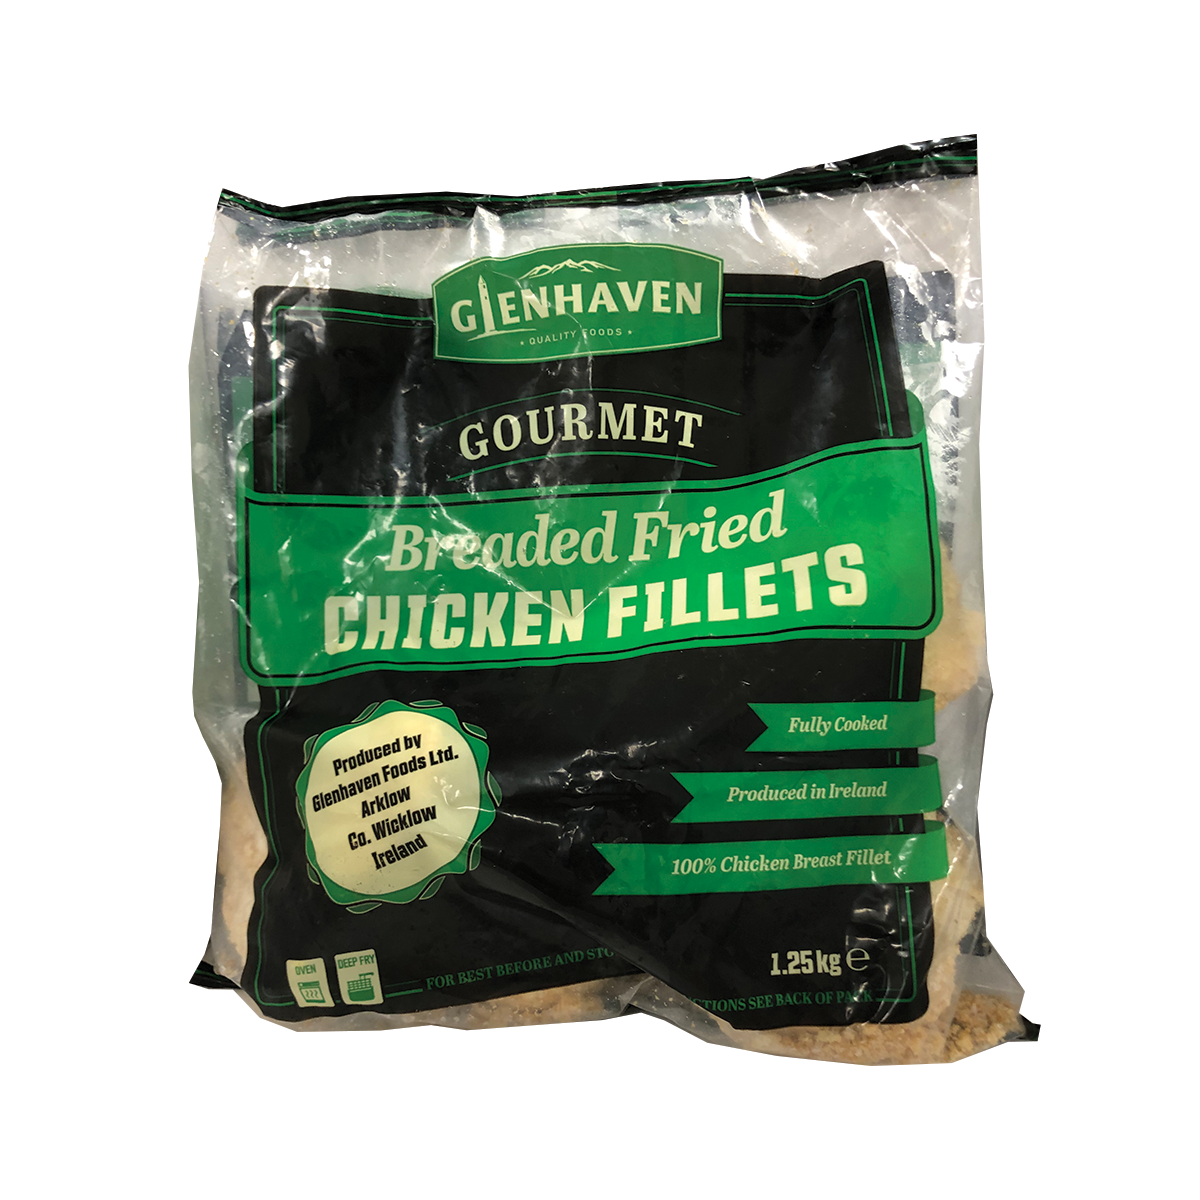 Glenhaven Breaded Fried Chicken Fillets